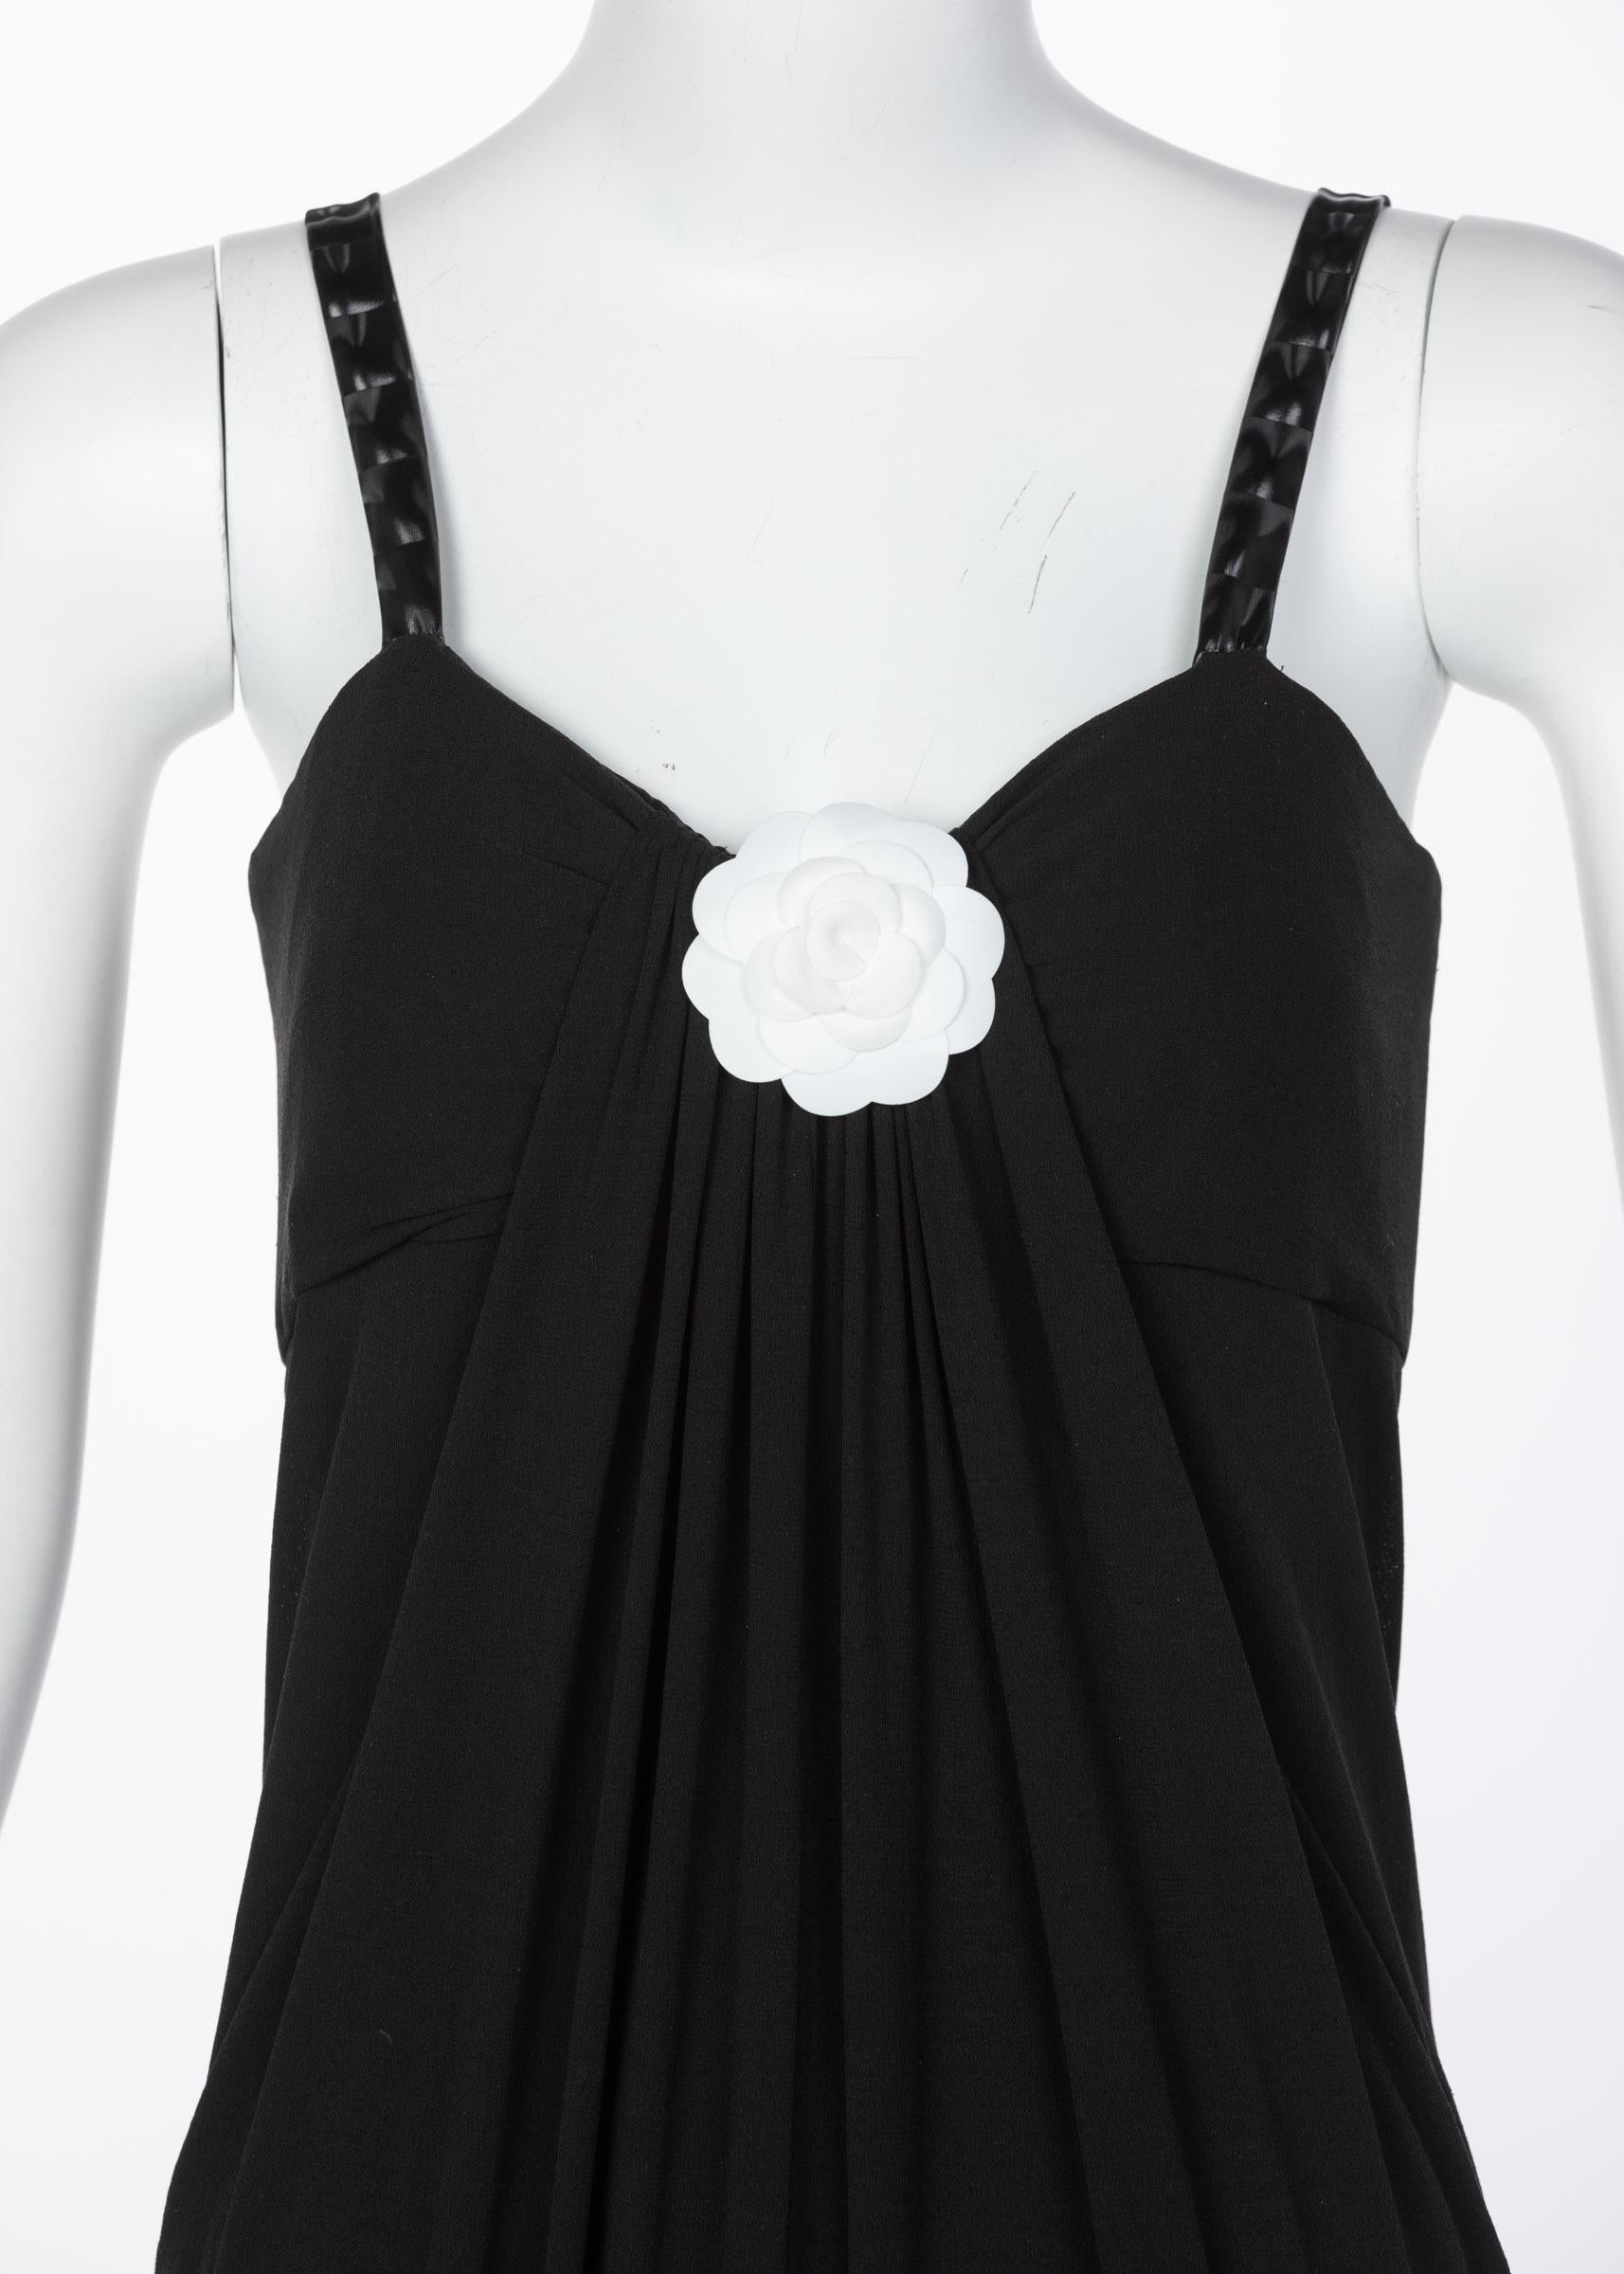 Chanel Sleeveless Black Cocktail Dress Camellia Laser Cut Bomber Jacket Set, 3